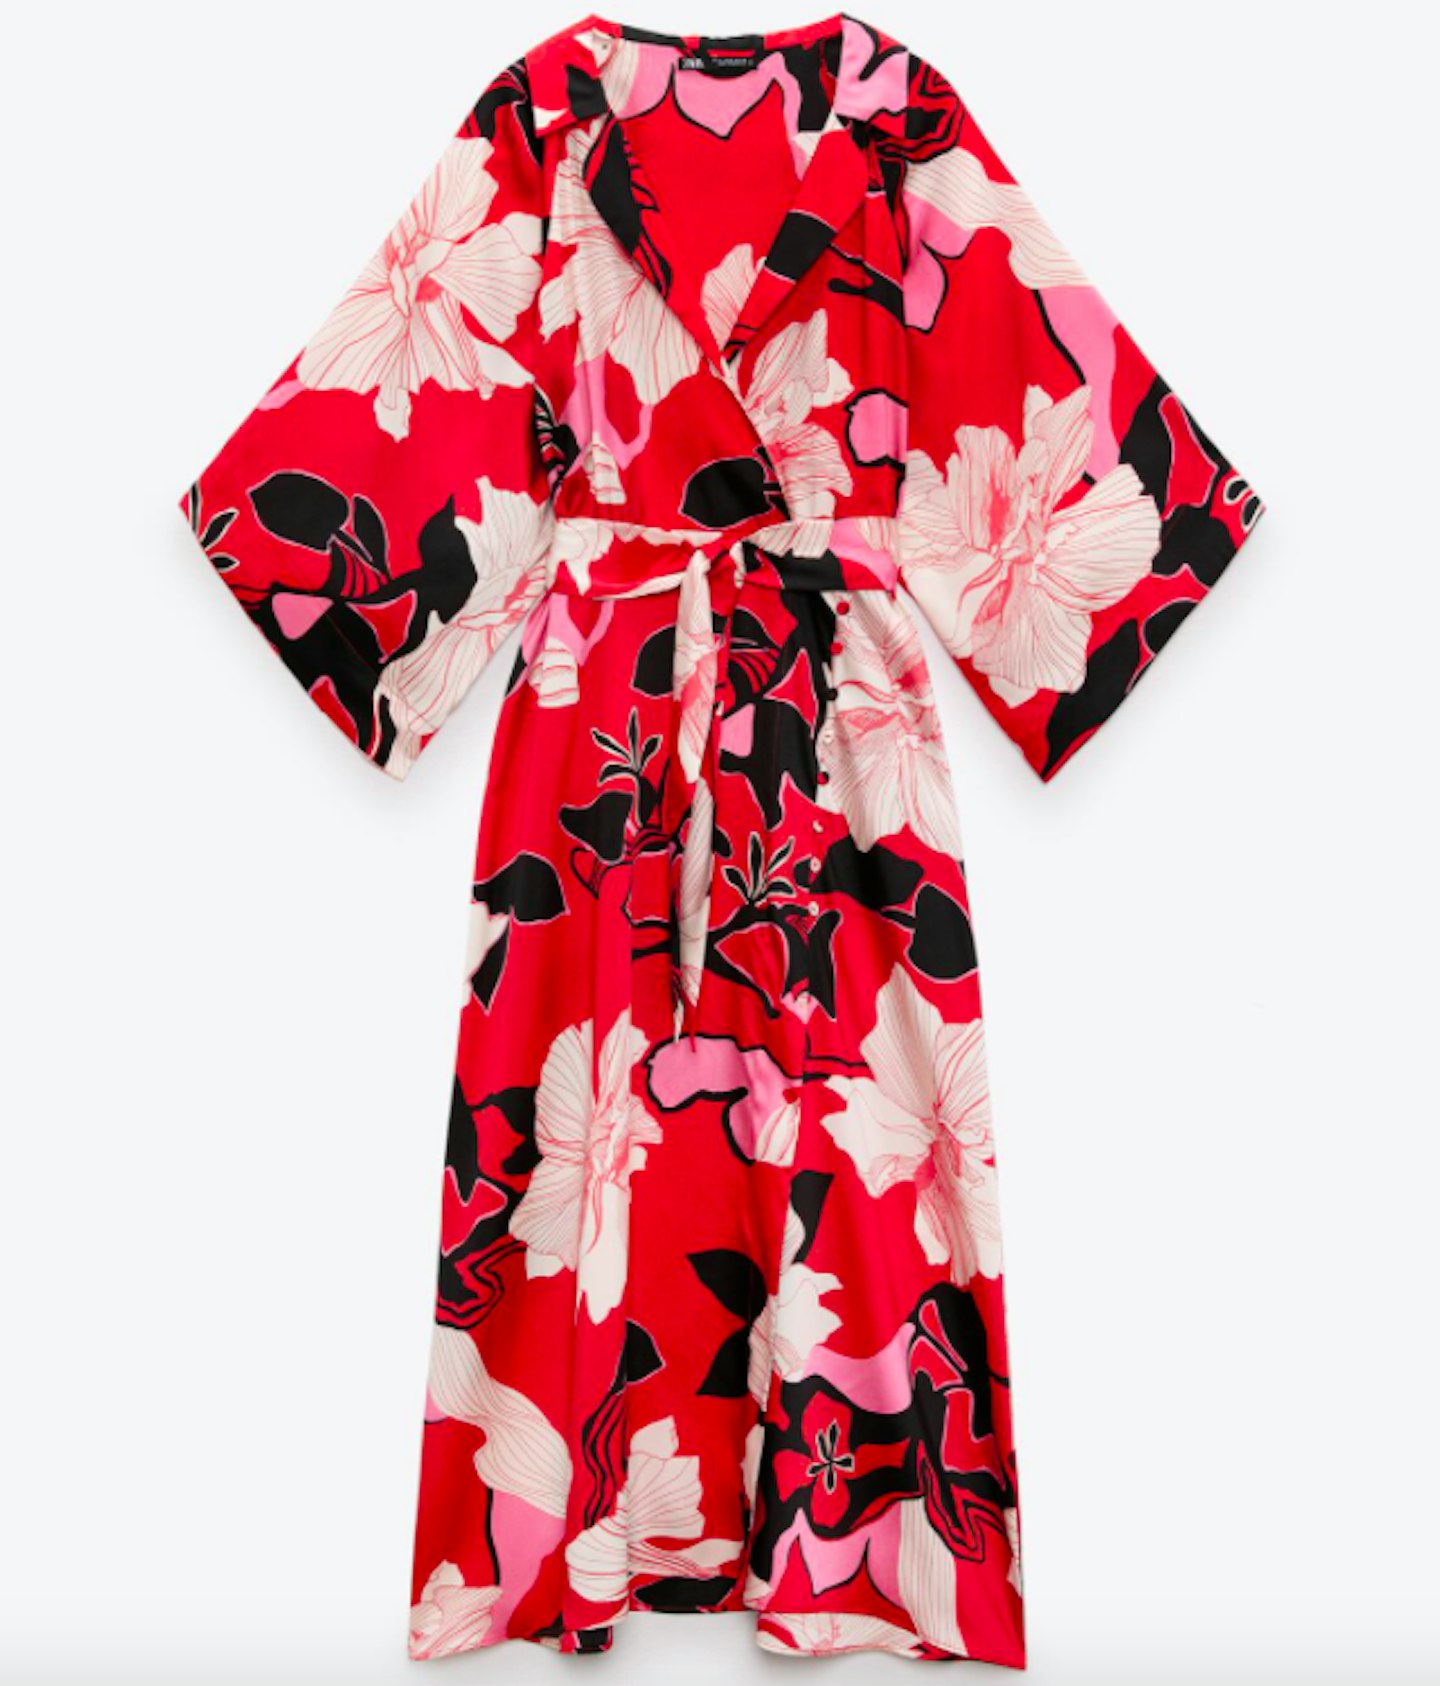 Zara, Floral Print Dress, £59.99